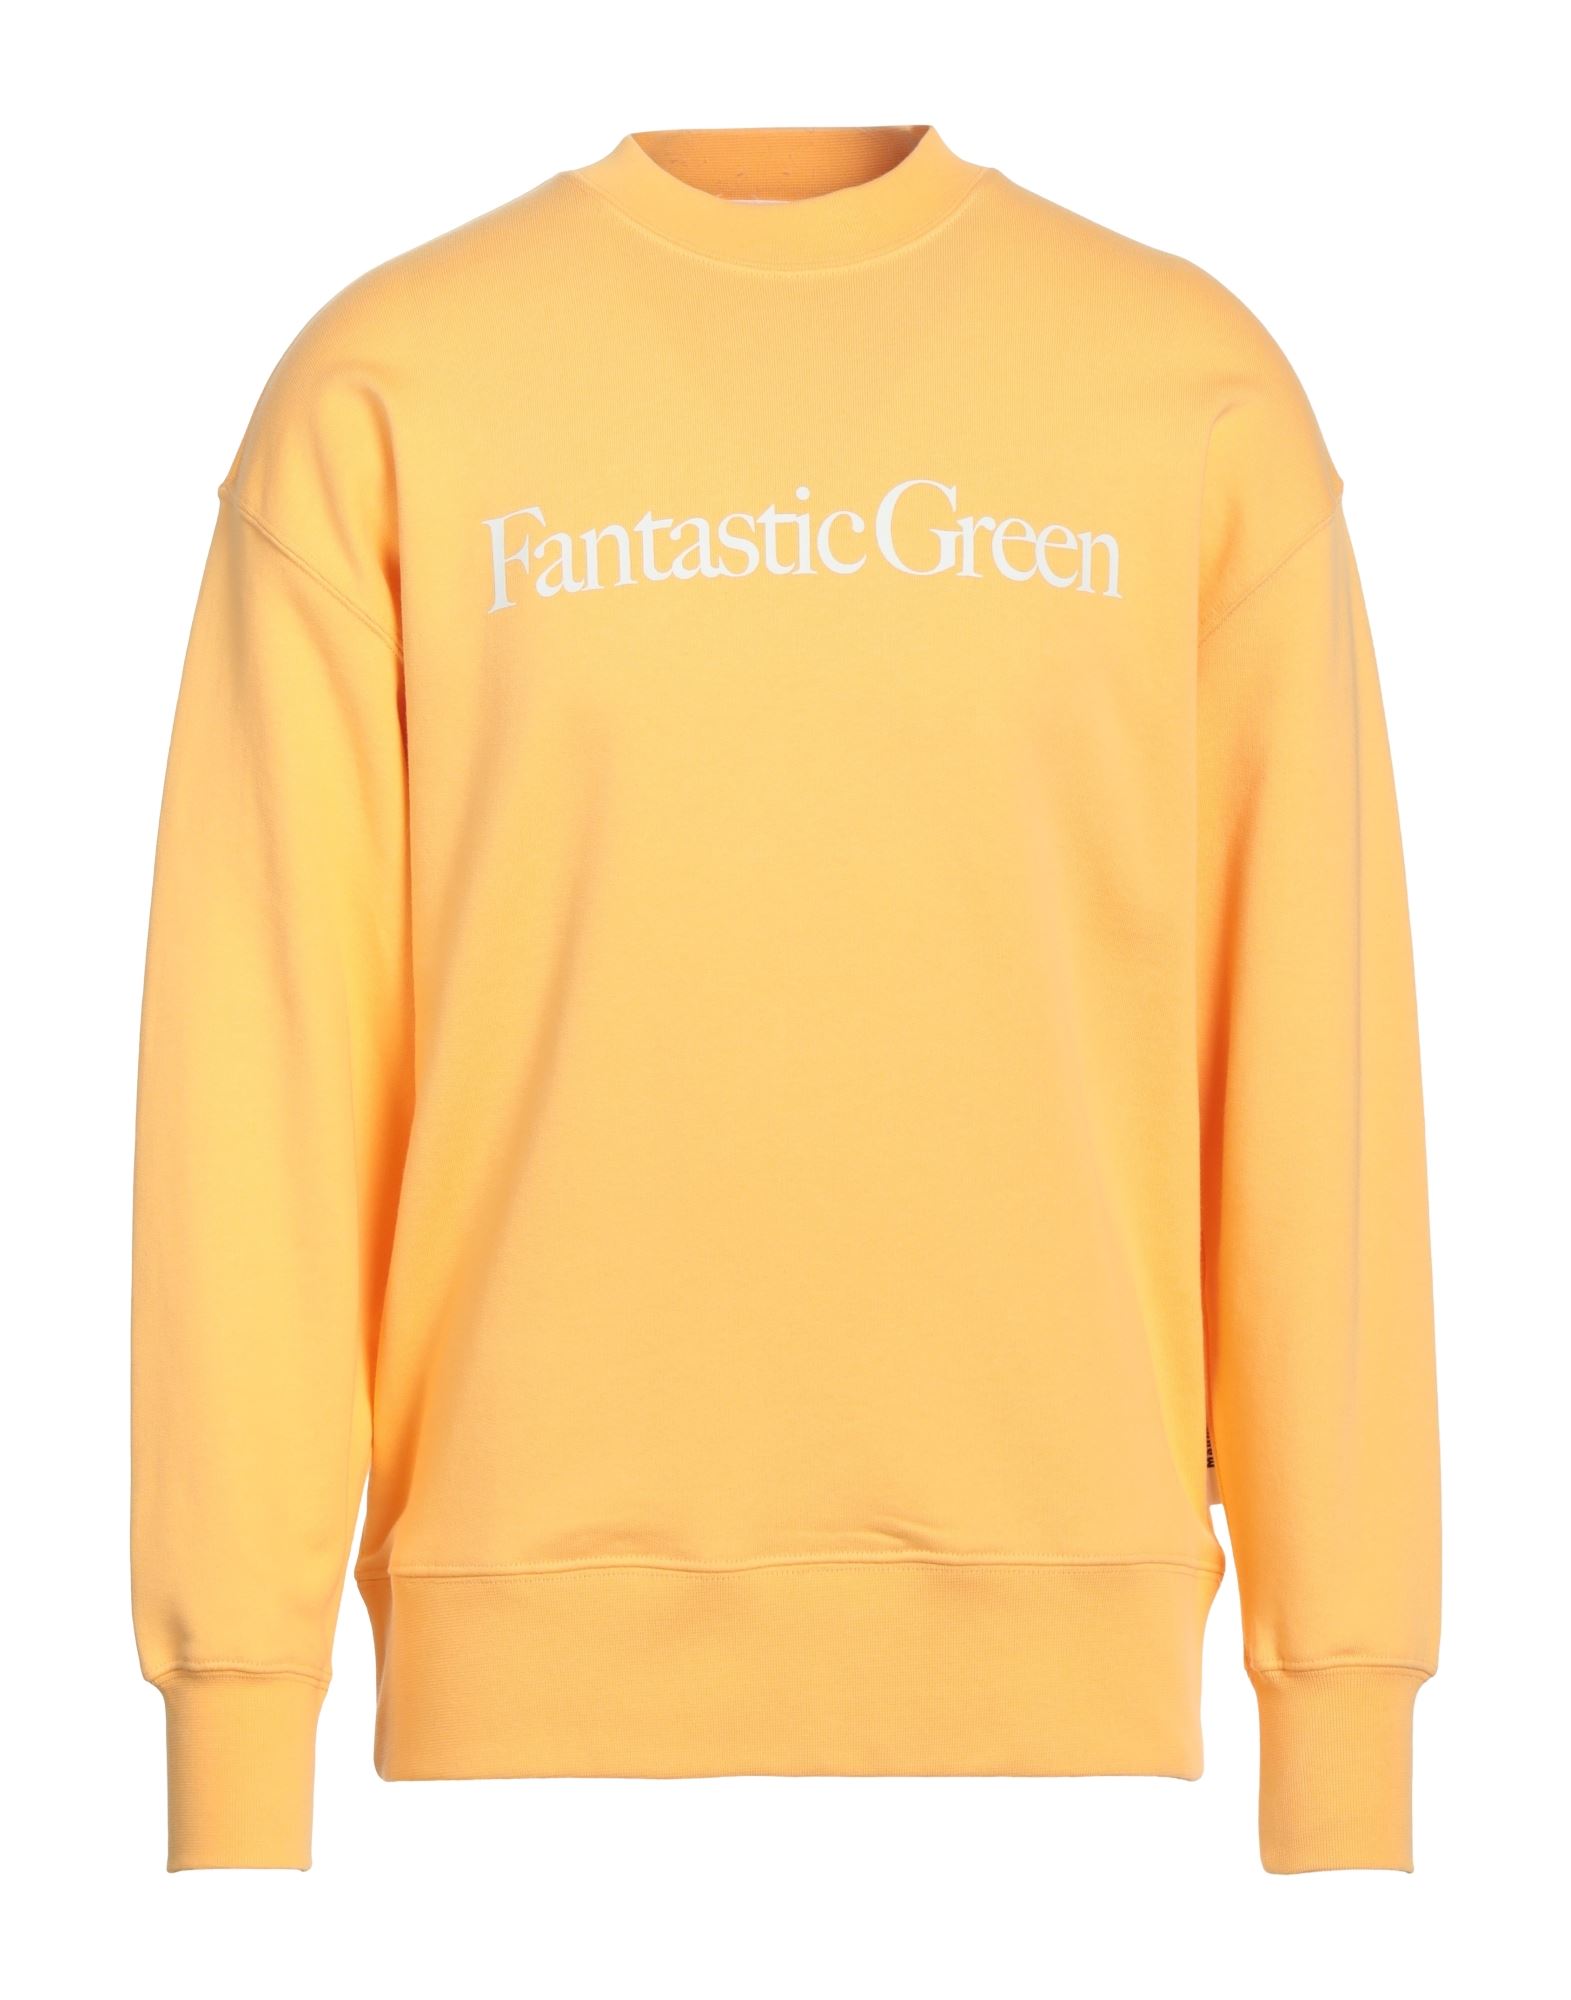 Msgm Sweatshirts In Orange